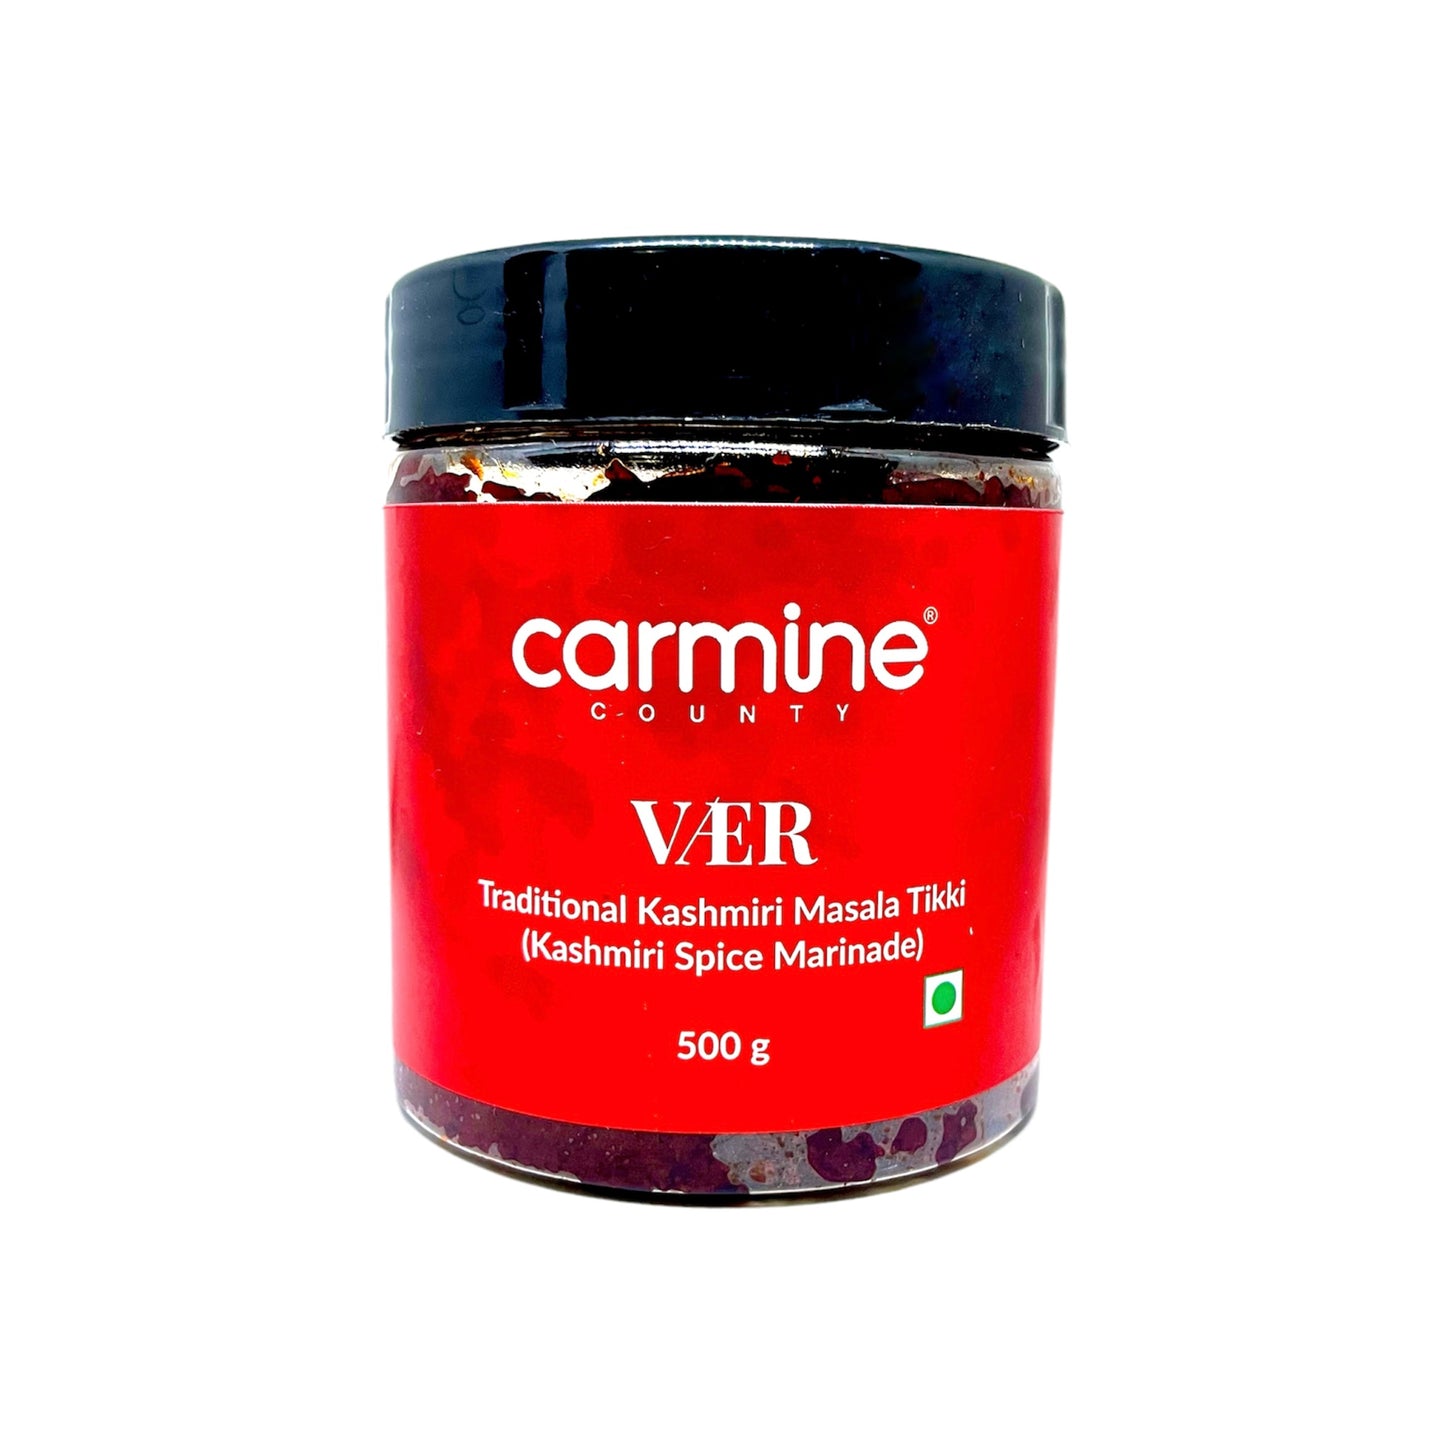 Carmine County Ver - Traditional Kashmiri Masala Tikki - Spice Marinade